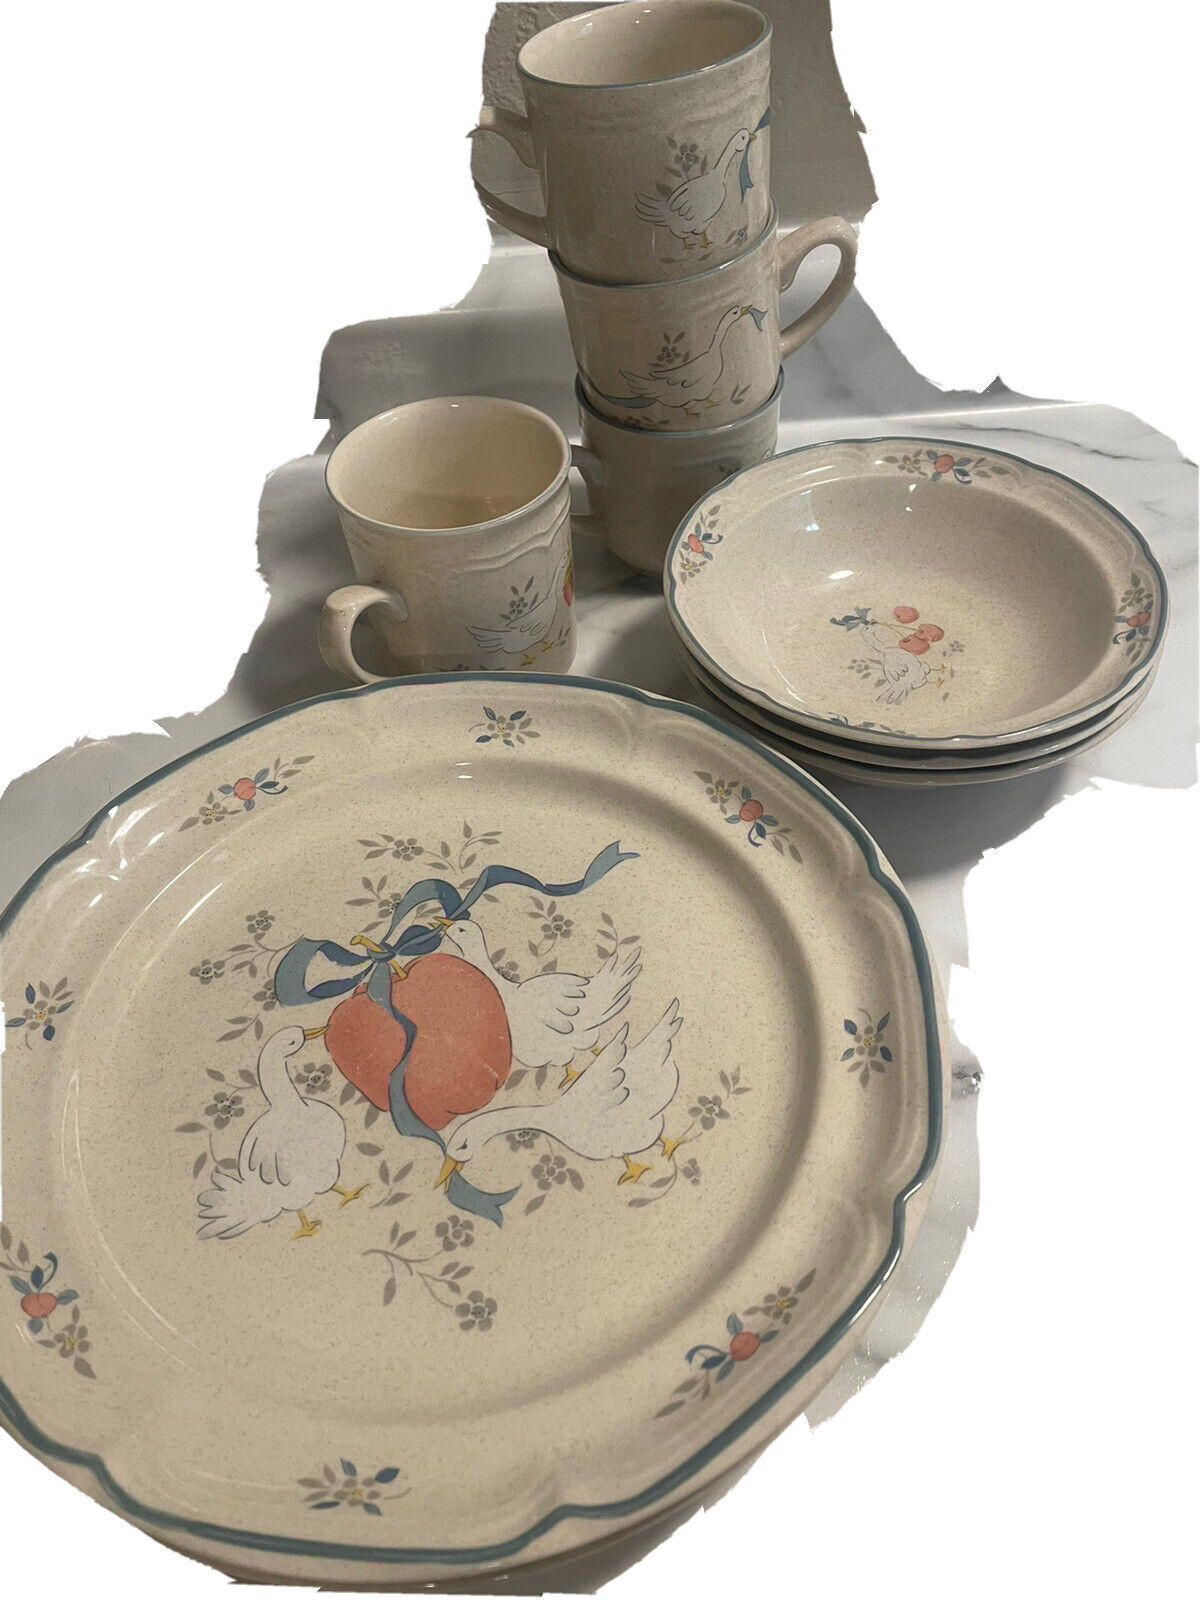 Vintage International China Marmalade Geese Set Of 3 plates, 3 bowls, 4 cups Без бренда